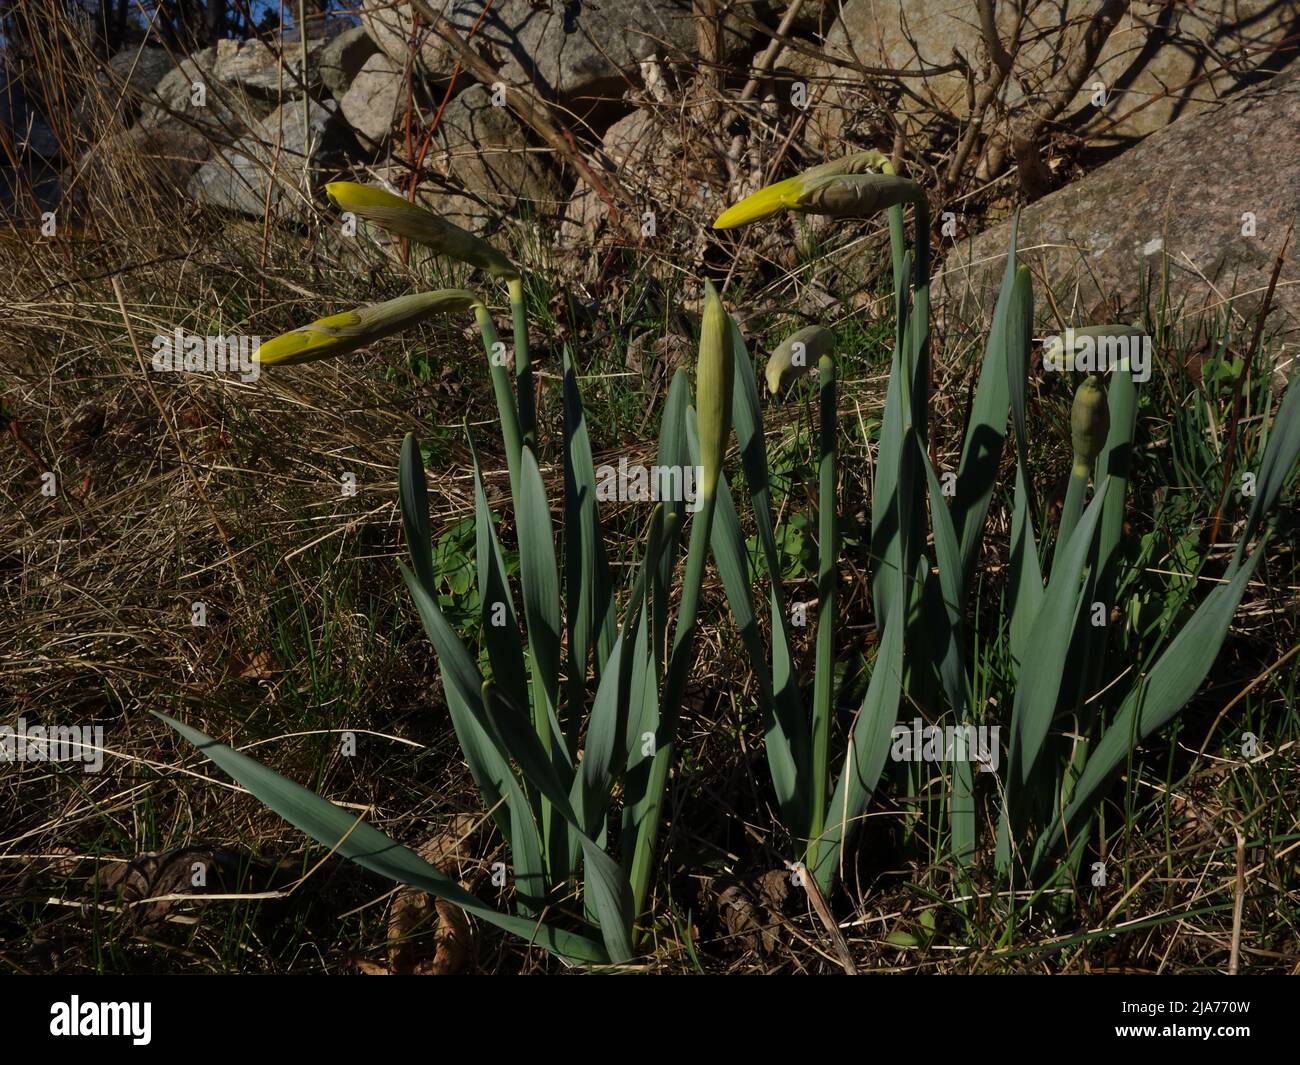 Daffodils bud in the spring sun. Stock Photo